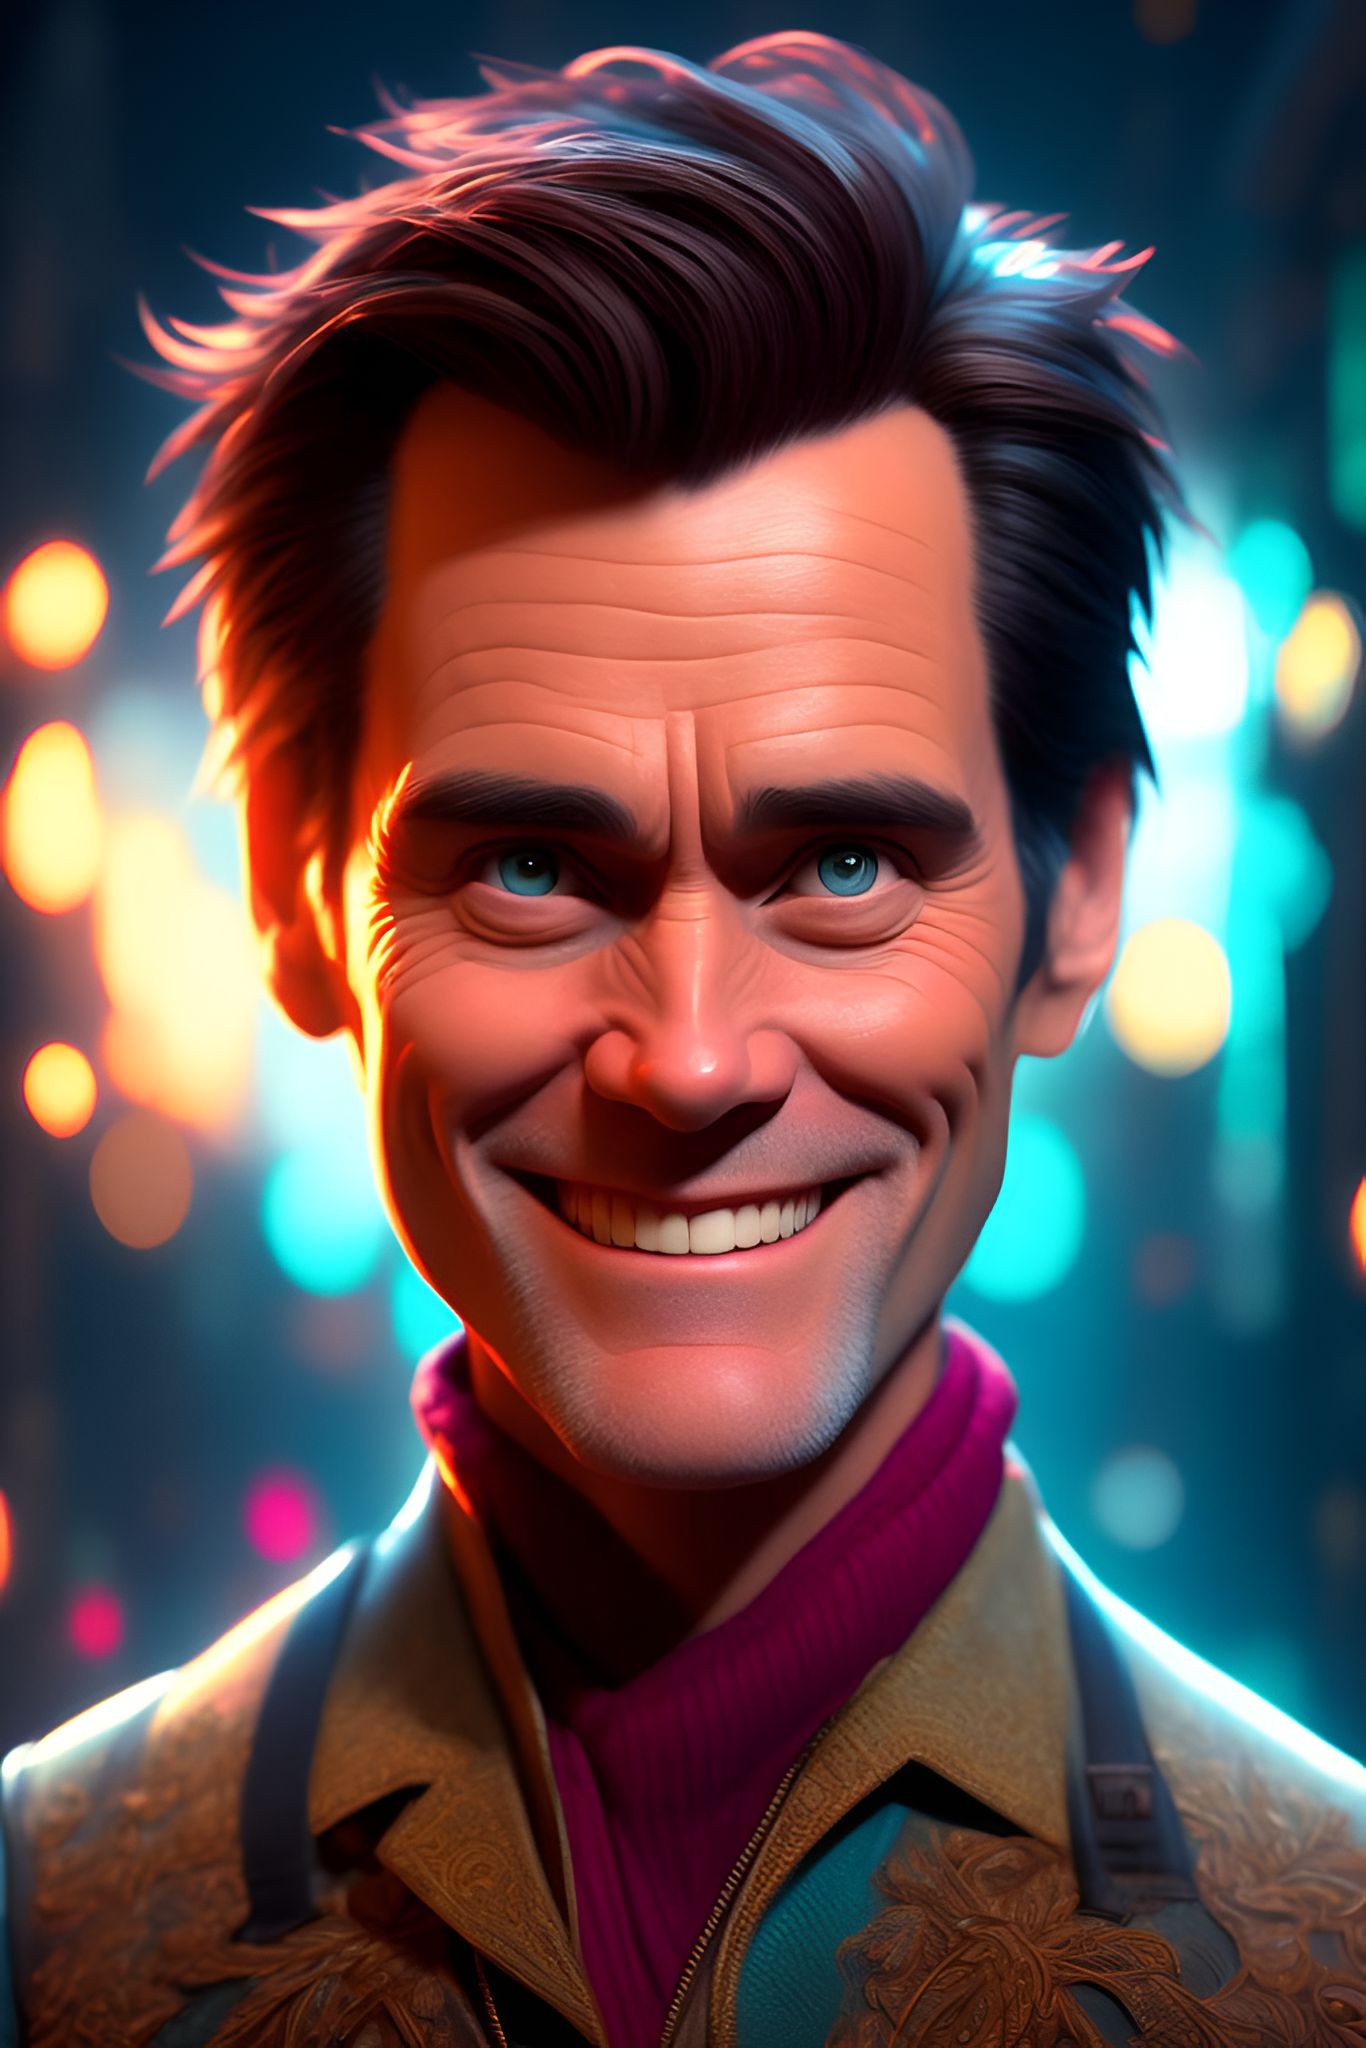 Squirrel_Hunt: Jim Carrey smiling, portrait, upper body, Jim Carrey actor